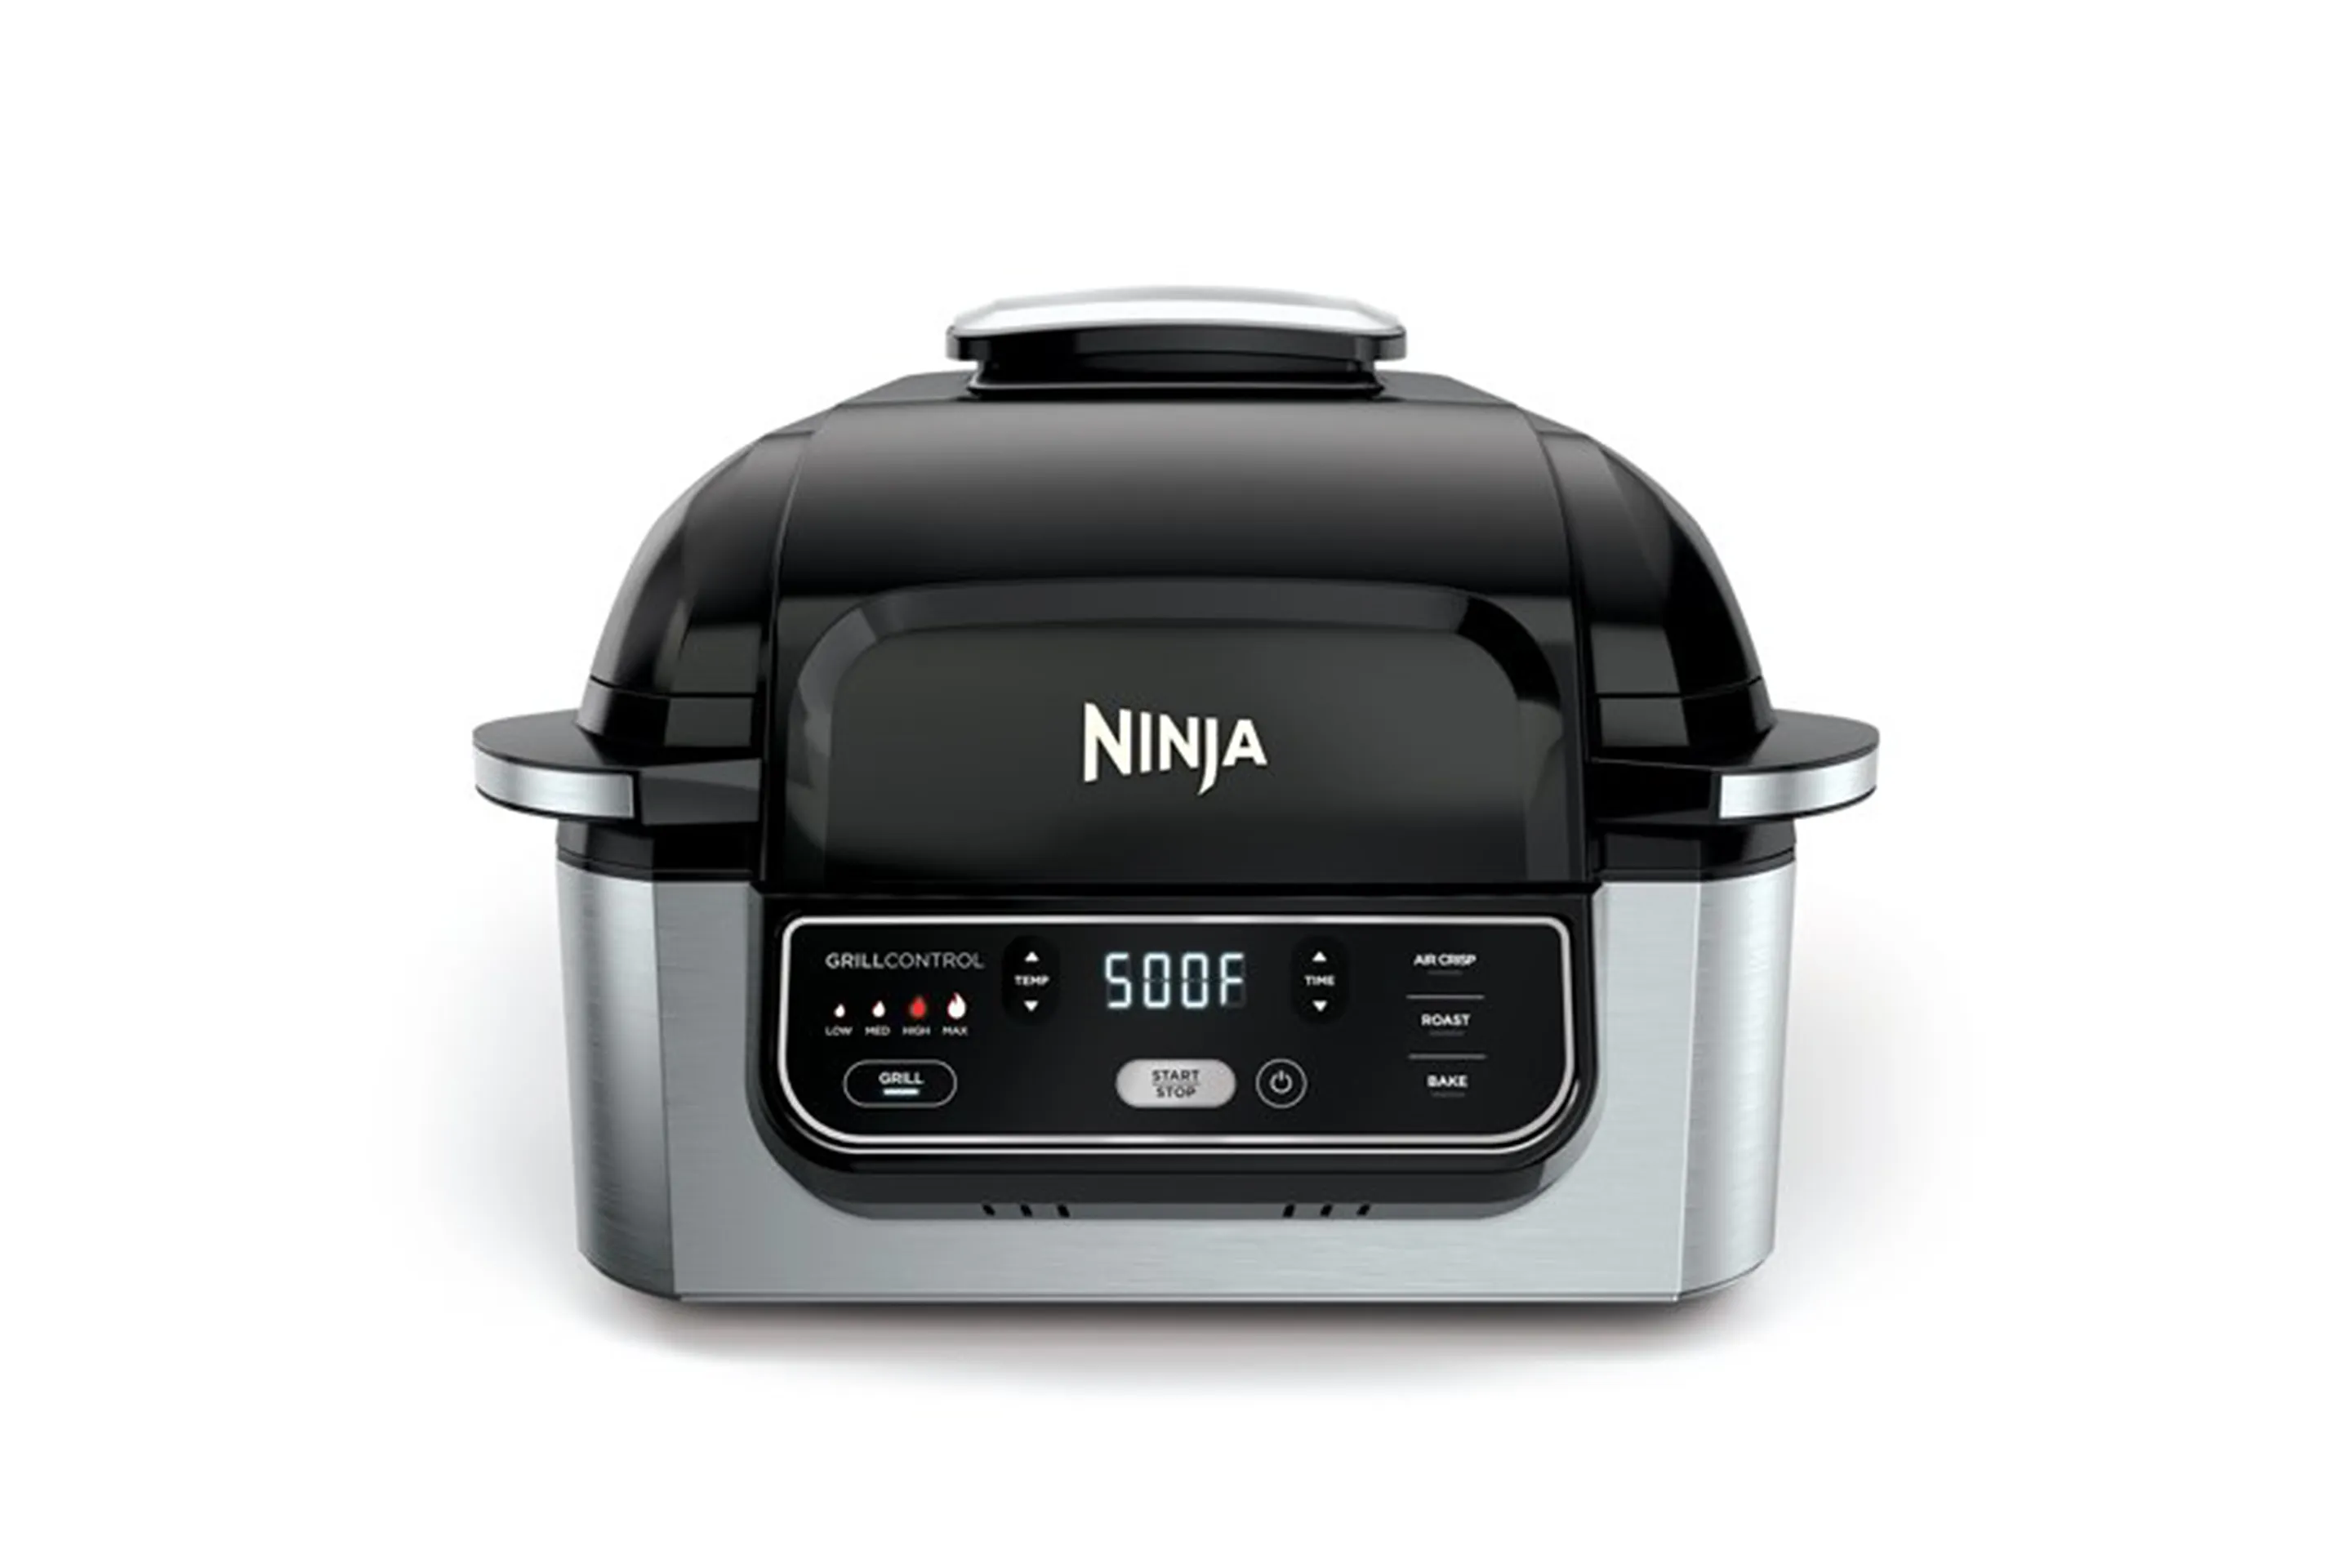 https://img.money.com/2021/11/Shopping-Ninja-Foodi-4-in-1-Indoor-Grill-with-Air-Fryer.jpg